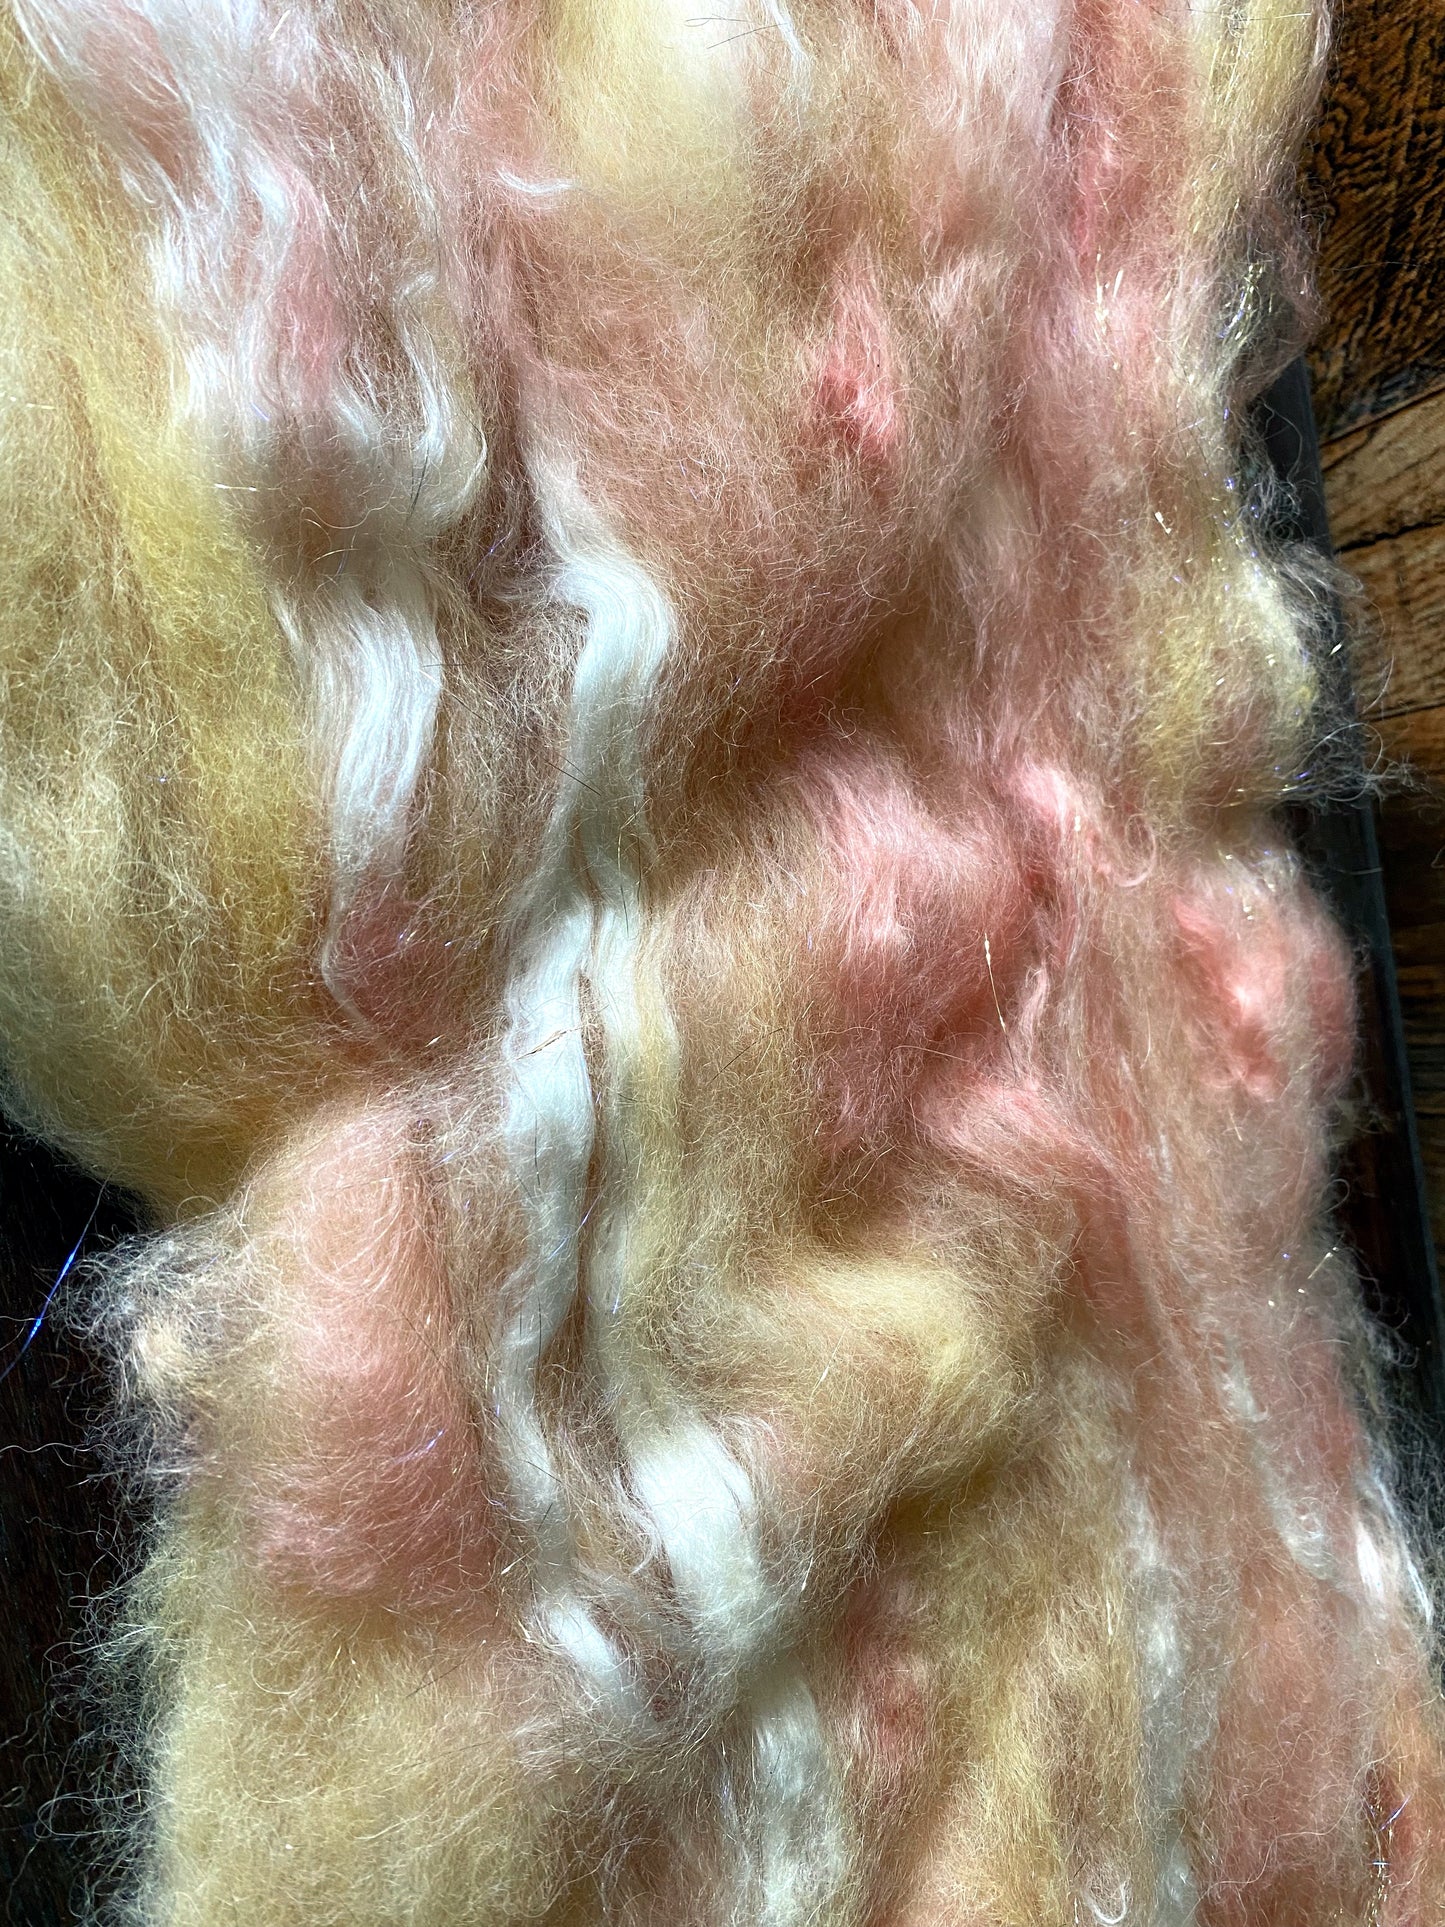 Mohair, Alpaca, and Silk Art Batt for Spinning or Felting ~ Dreamsicle